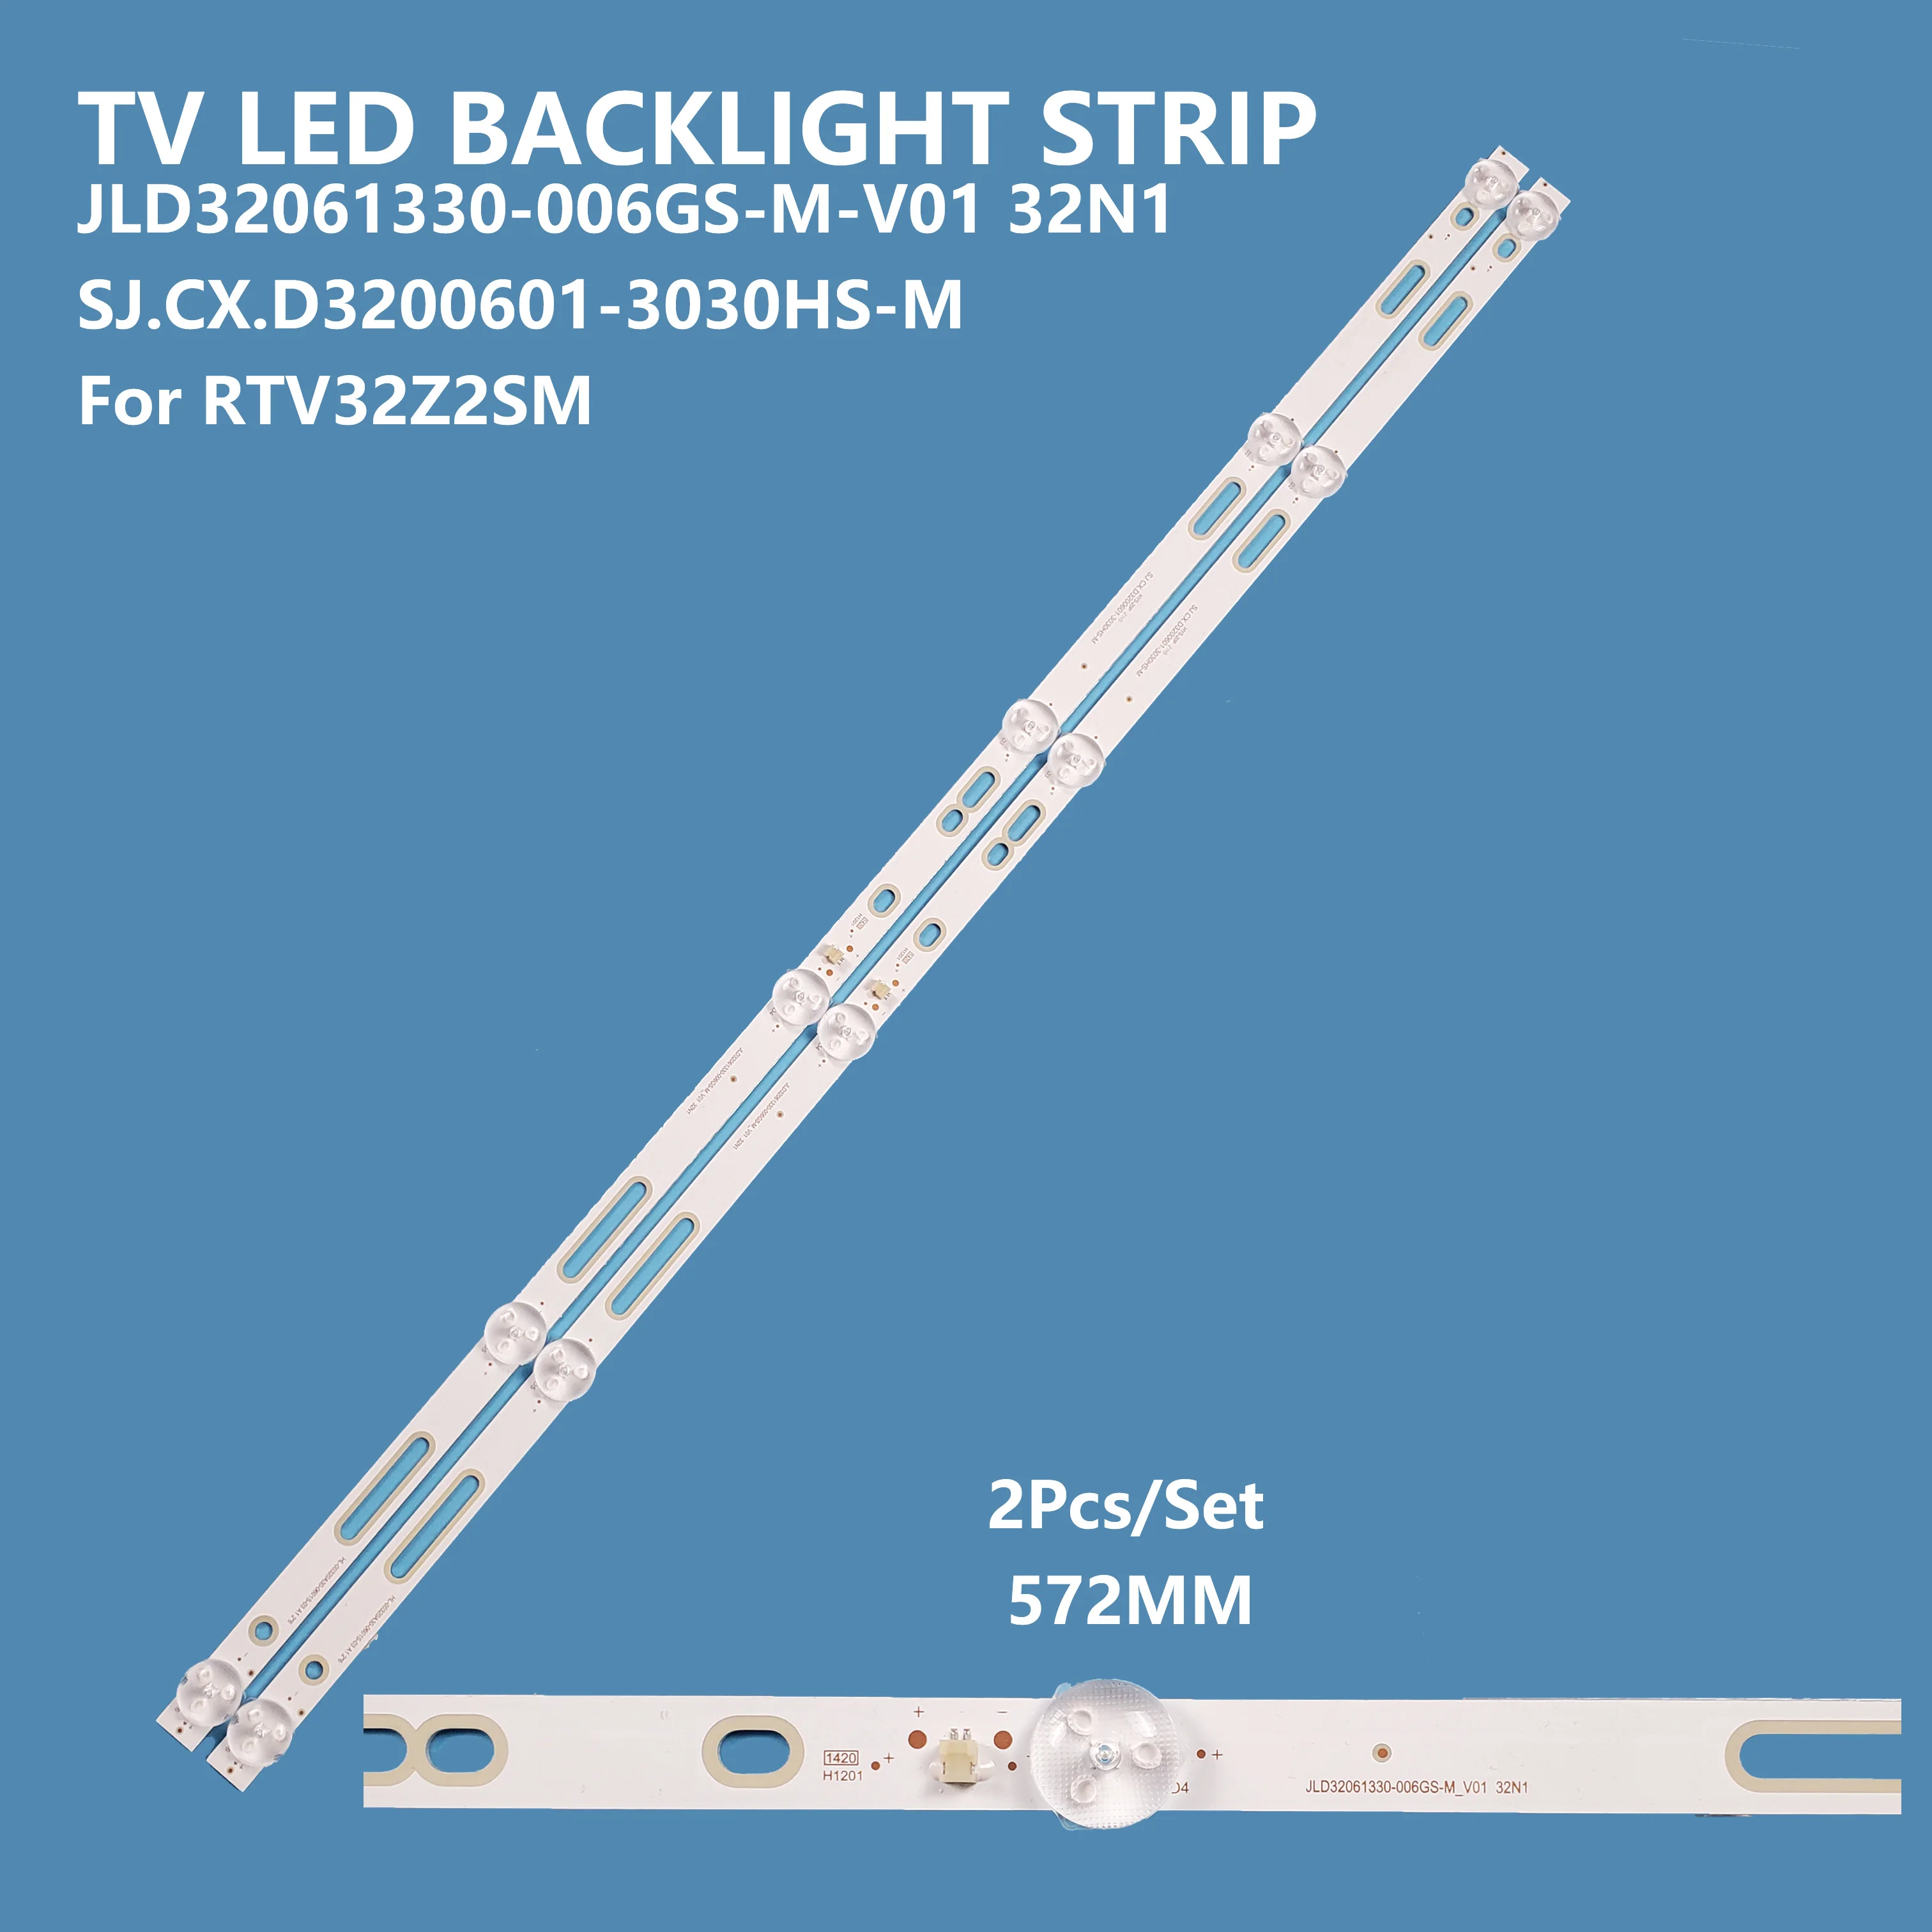 2Pcs/set LED Backlight Bar Light Strip JL.D32061330-006GS-M-V01 32N1 HL-00320A30-0601S-03 A1 for 32inch TV Accessories Repair 2pcs set tv led backlight bar light strip hd315s1h81 t0 2x5 15 apt 32lb02 for hisense 32inch hz32e35a 32v1a j hz32e350a repair